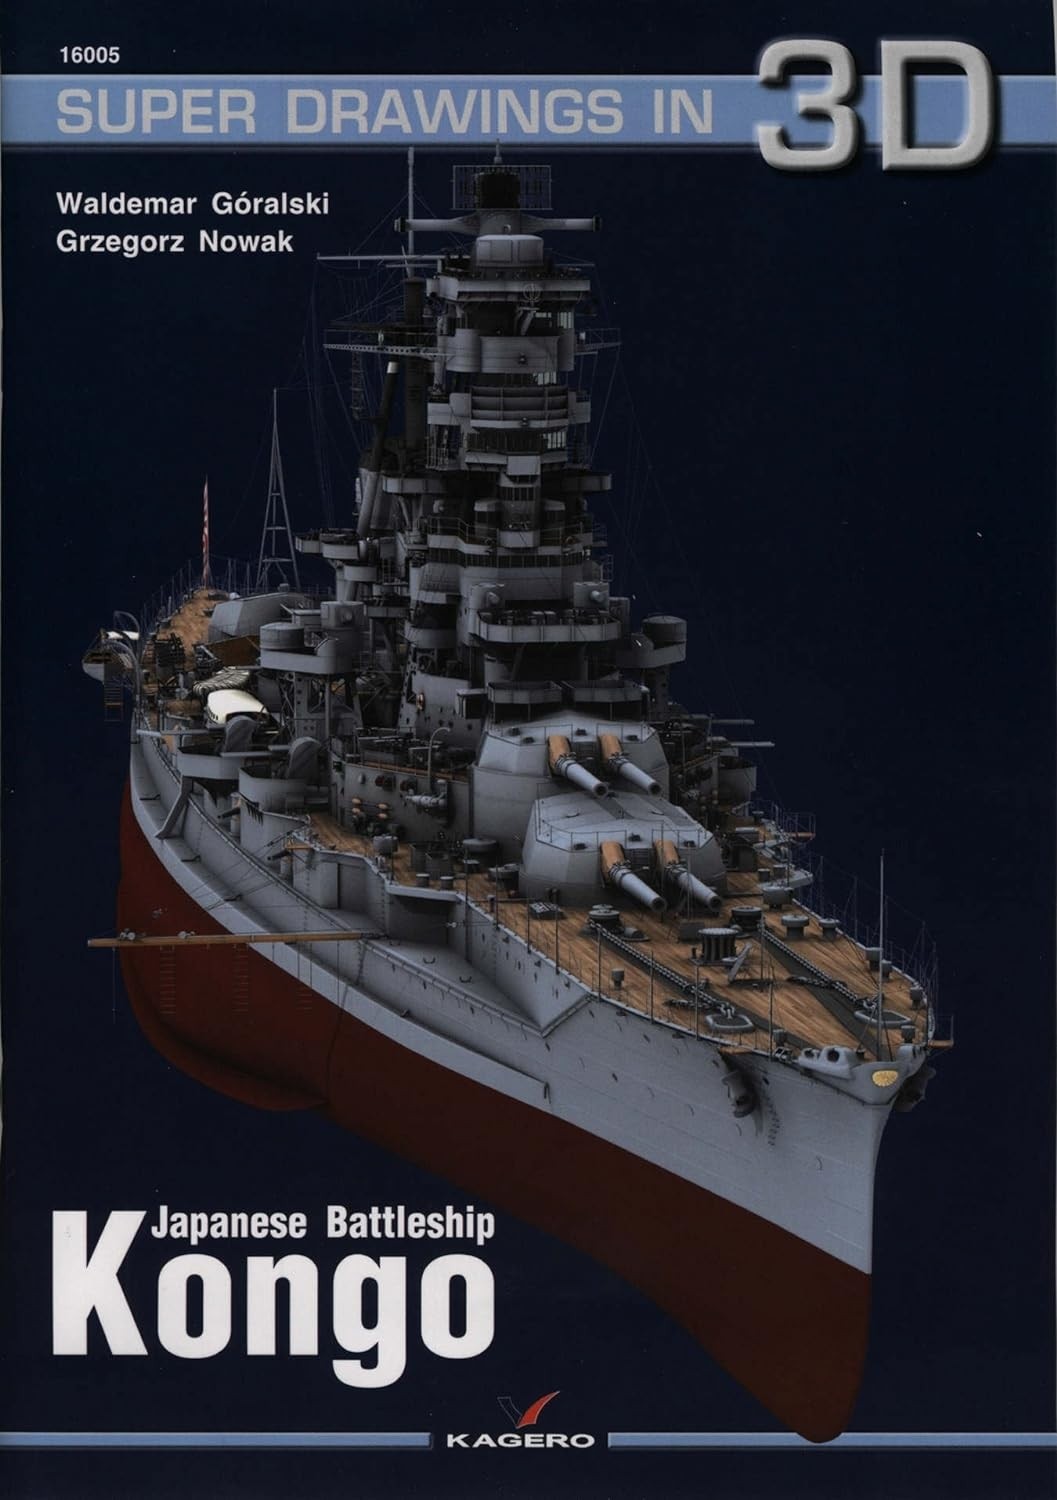  Japanese Battleship Kongo, Super Drawings in 3D